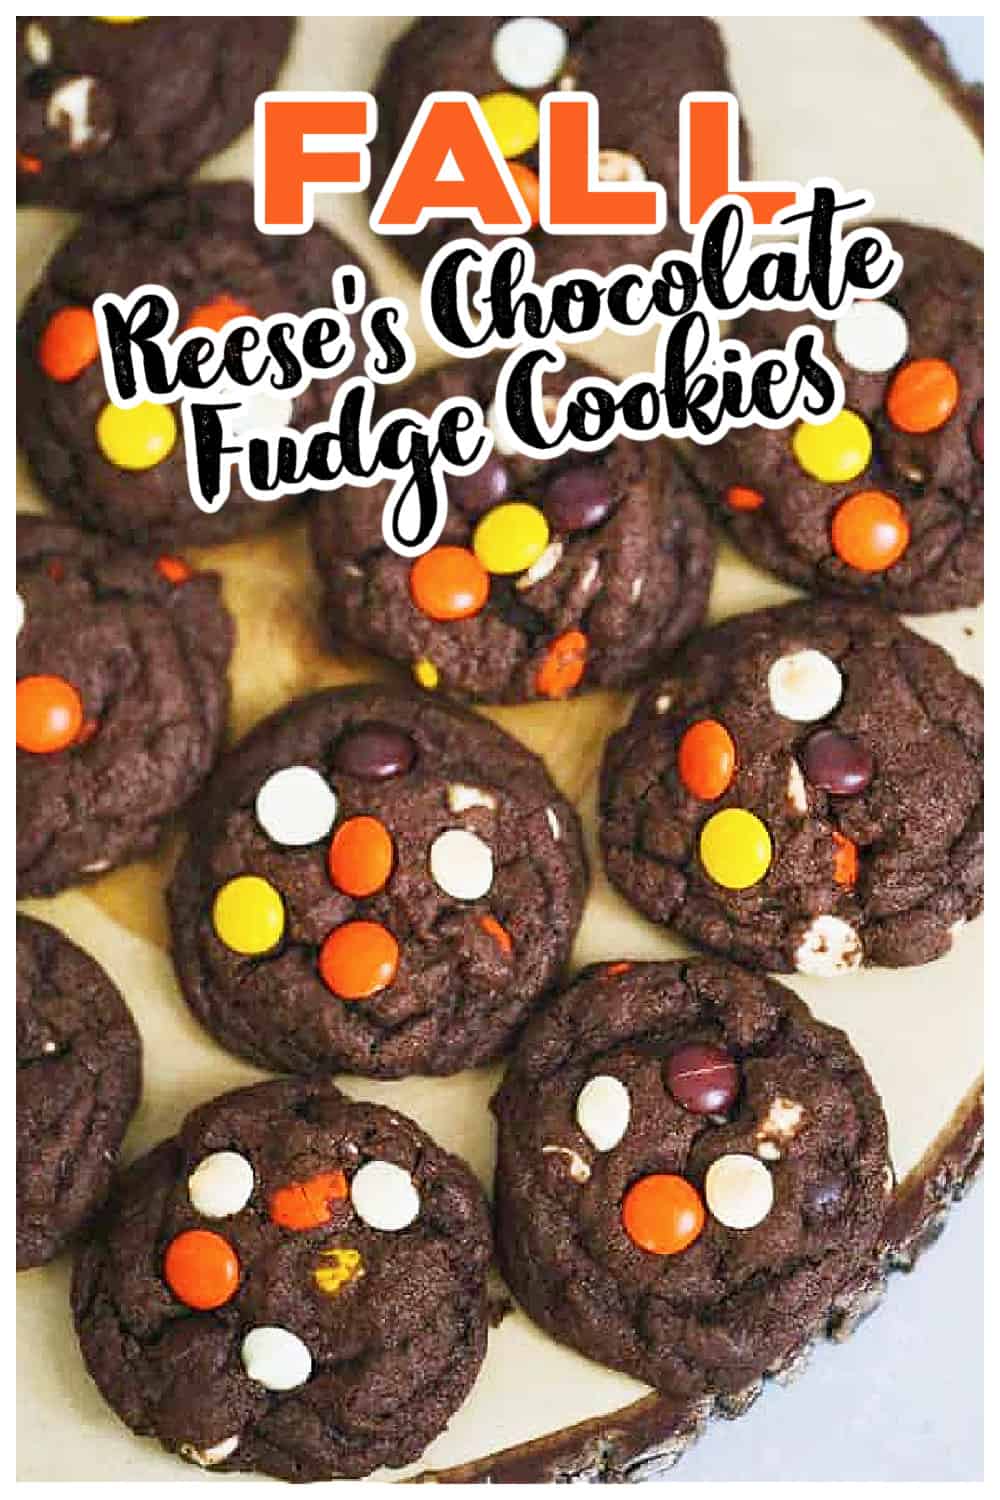 Reese's Chocolate Fudge Cookies